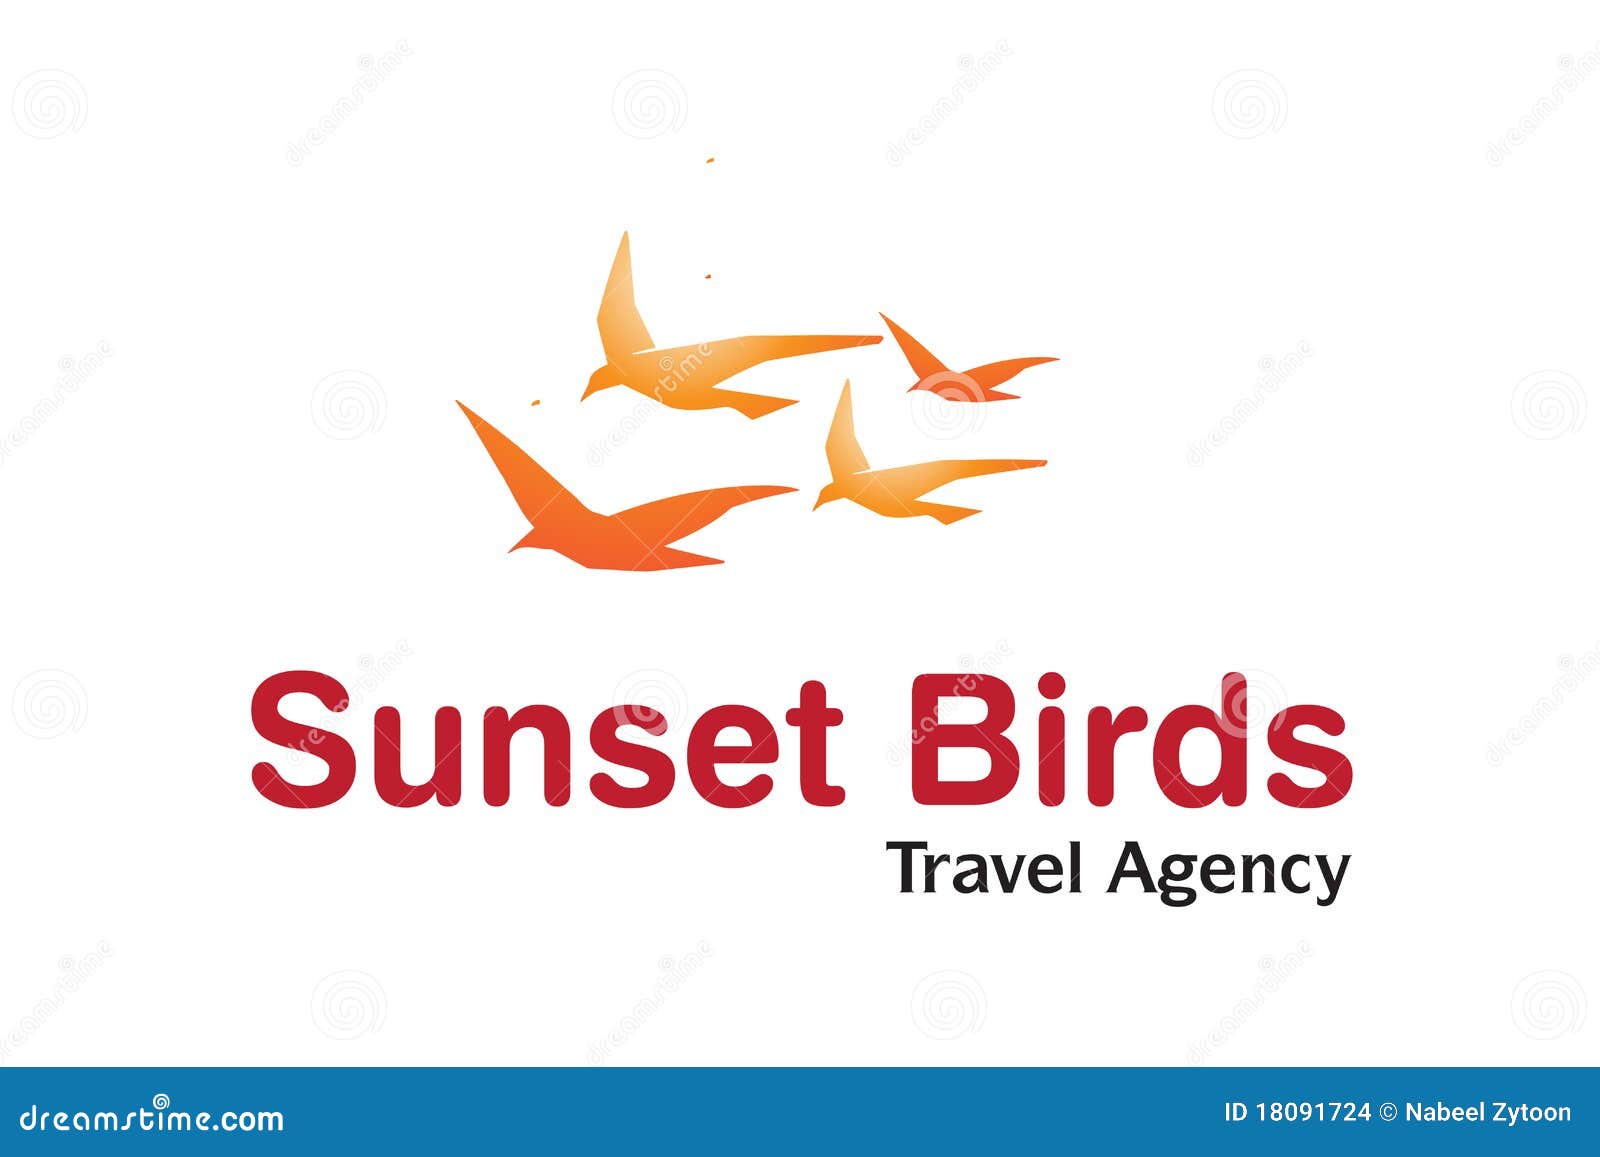 Travel Agency Logo Design stock illustration. Illustration of design